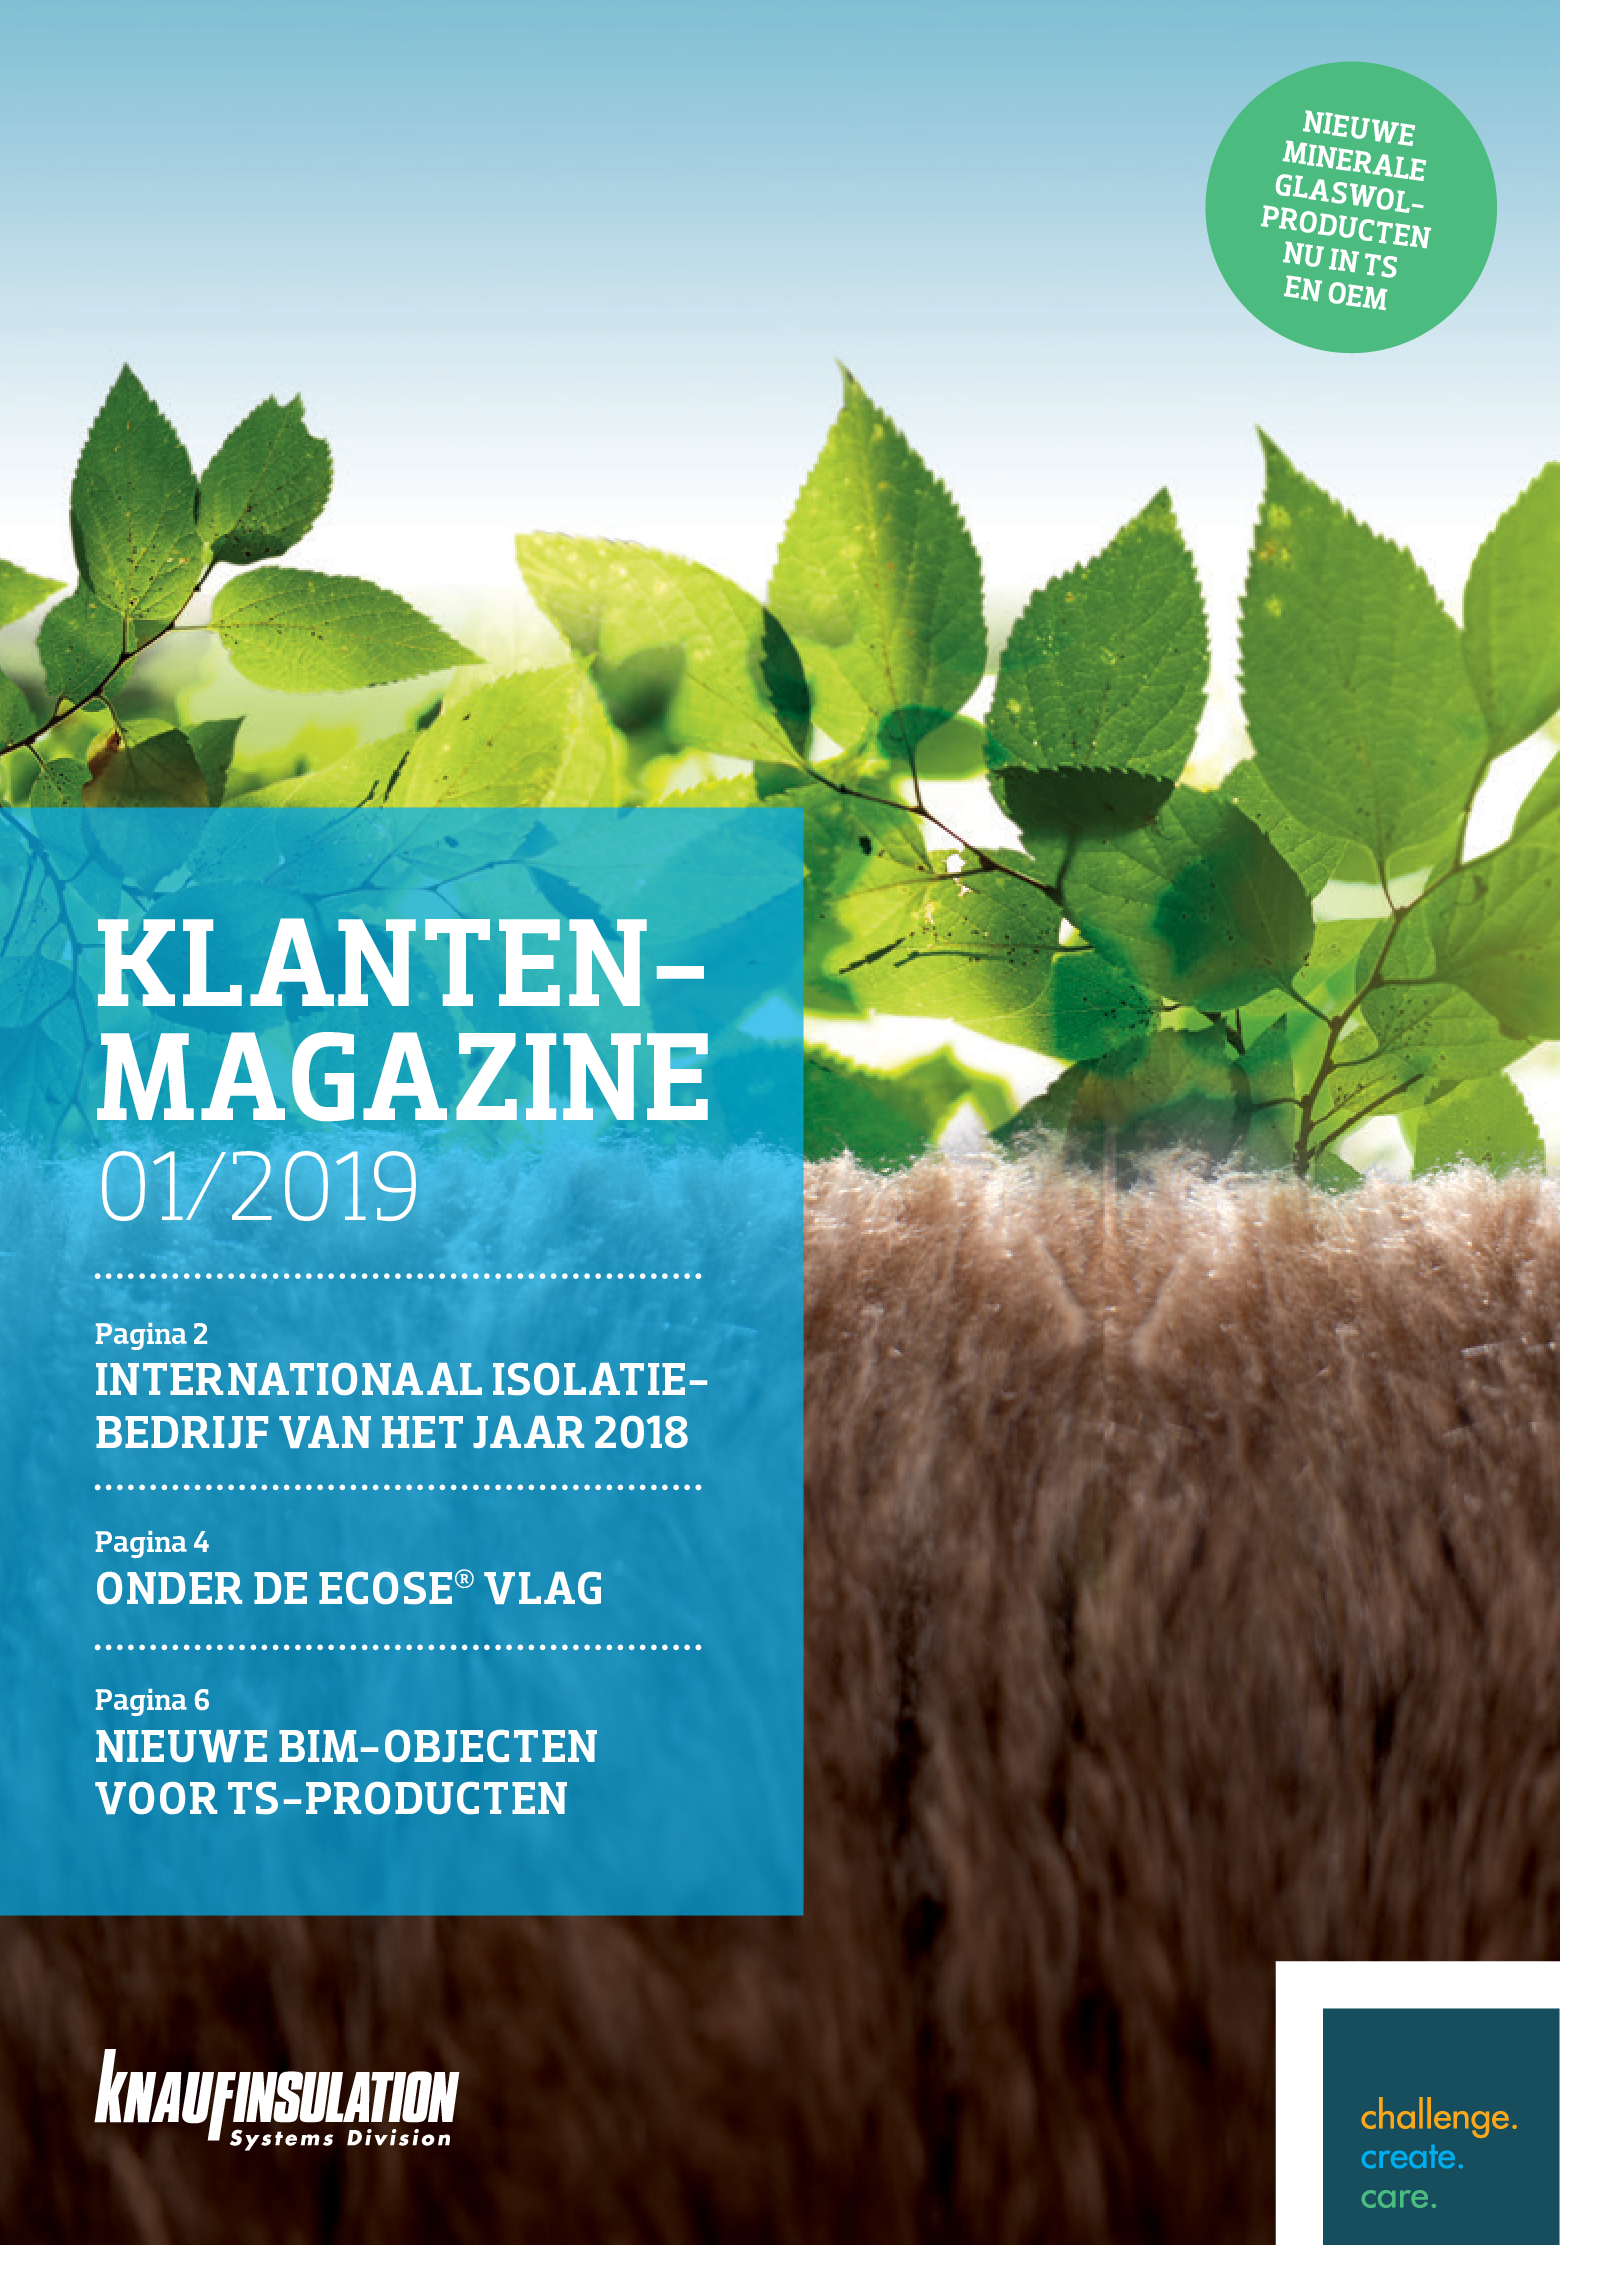 Klantenmagazine_Knauf Insulation Systems Division 01/2019